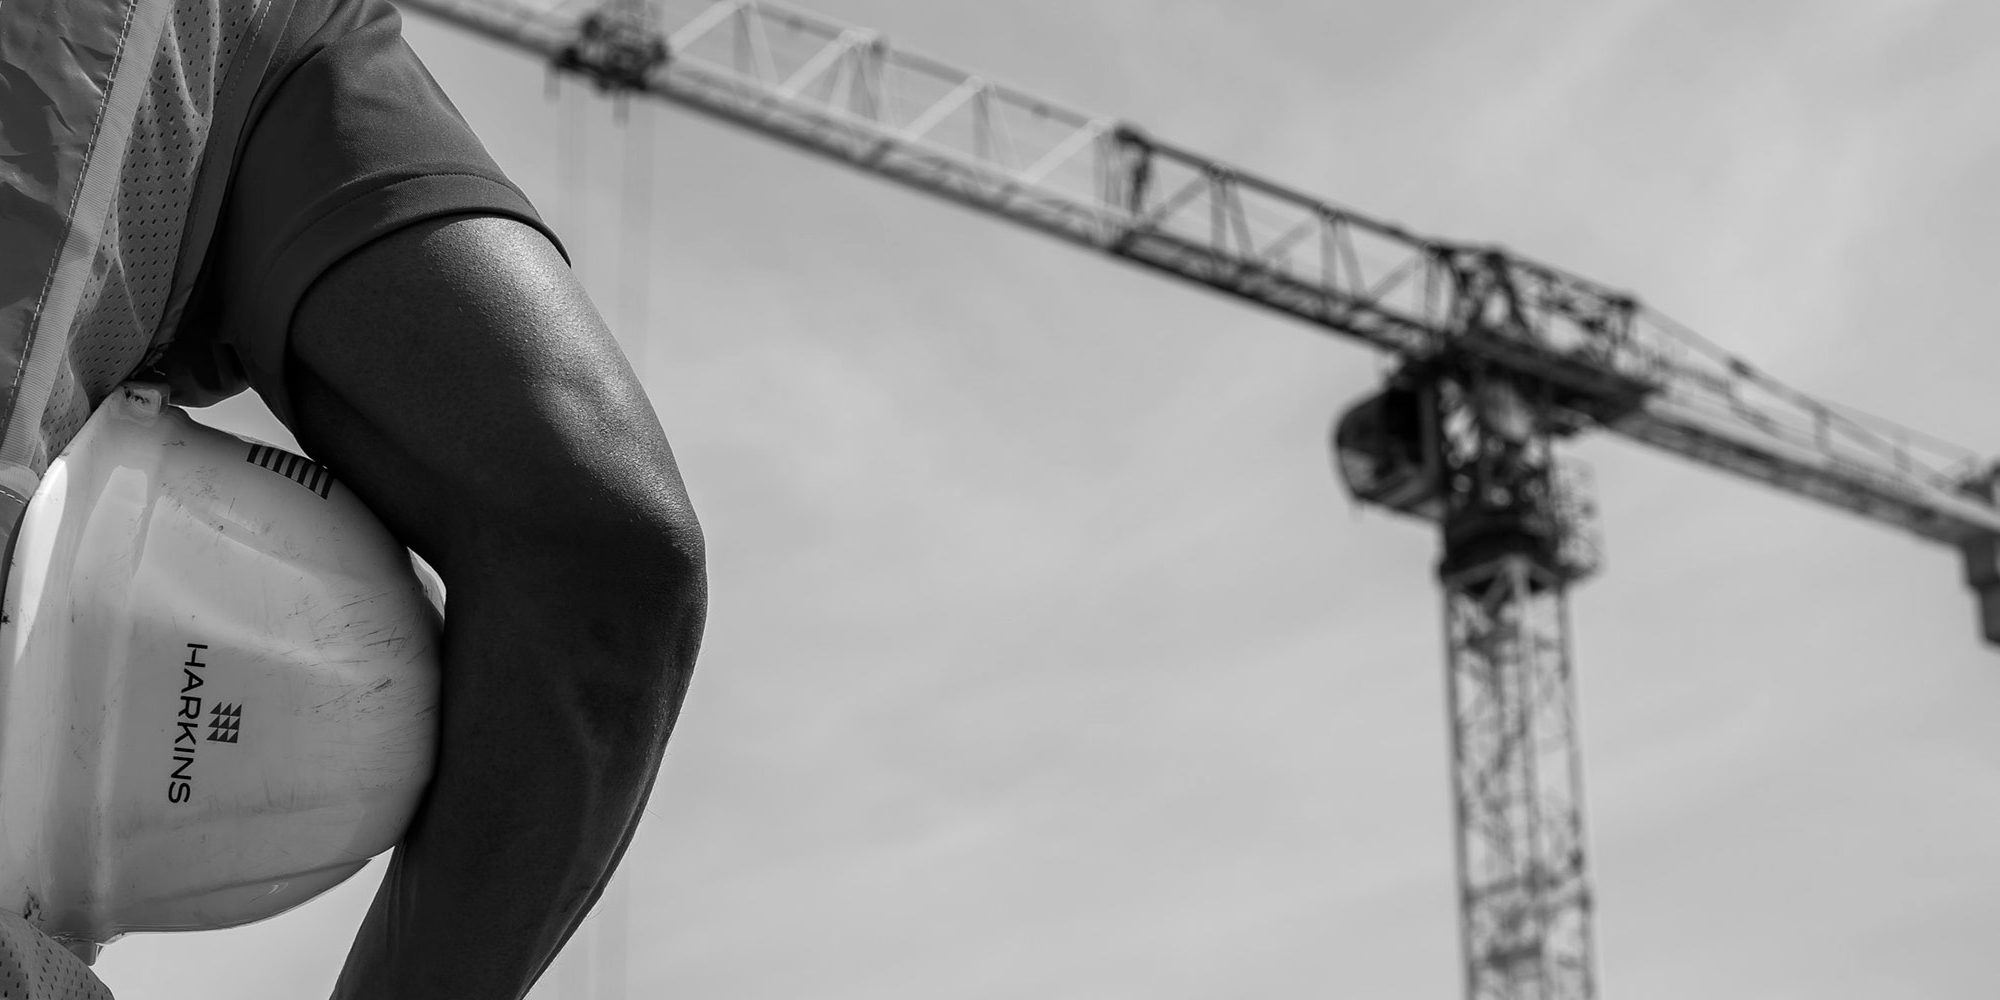 Construction worker standing in front of crane